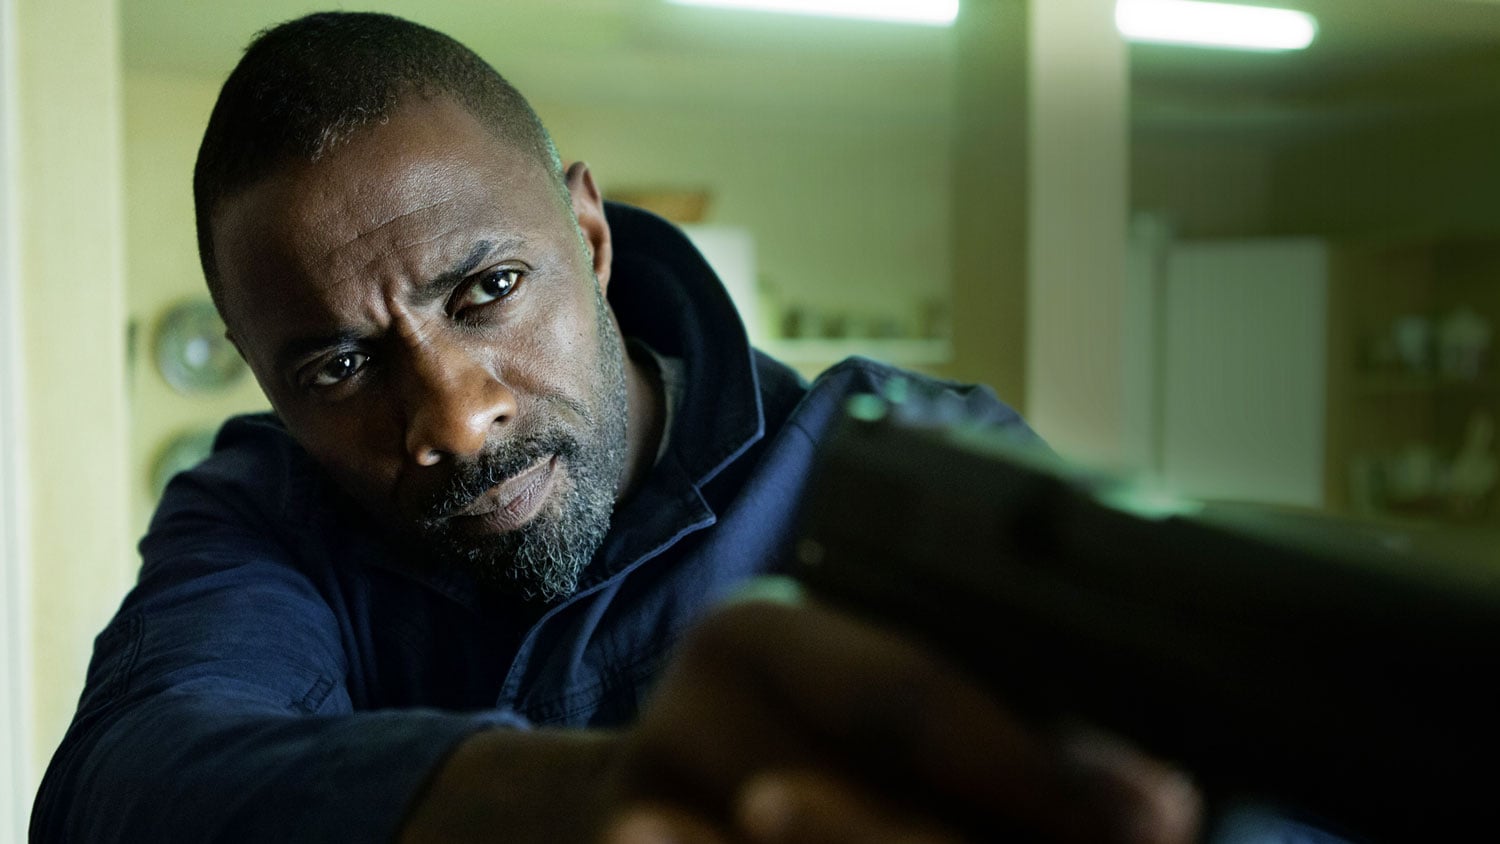 Idris-Elba-In-The-Conversation-To-Be-Next-James-Bond-Say-Bosses